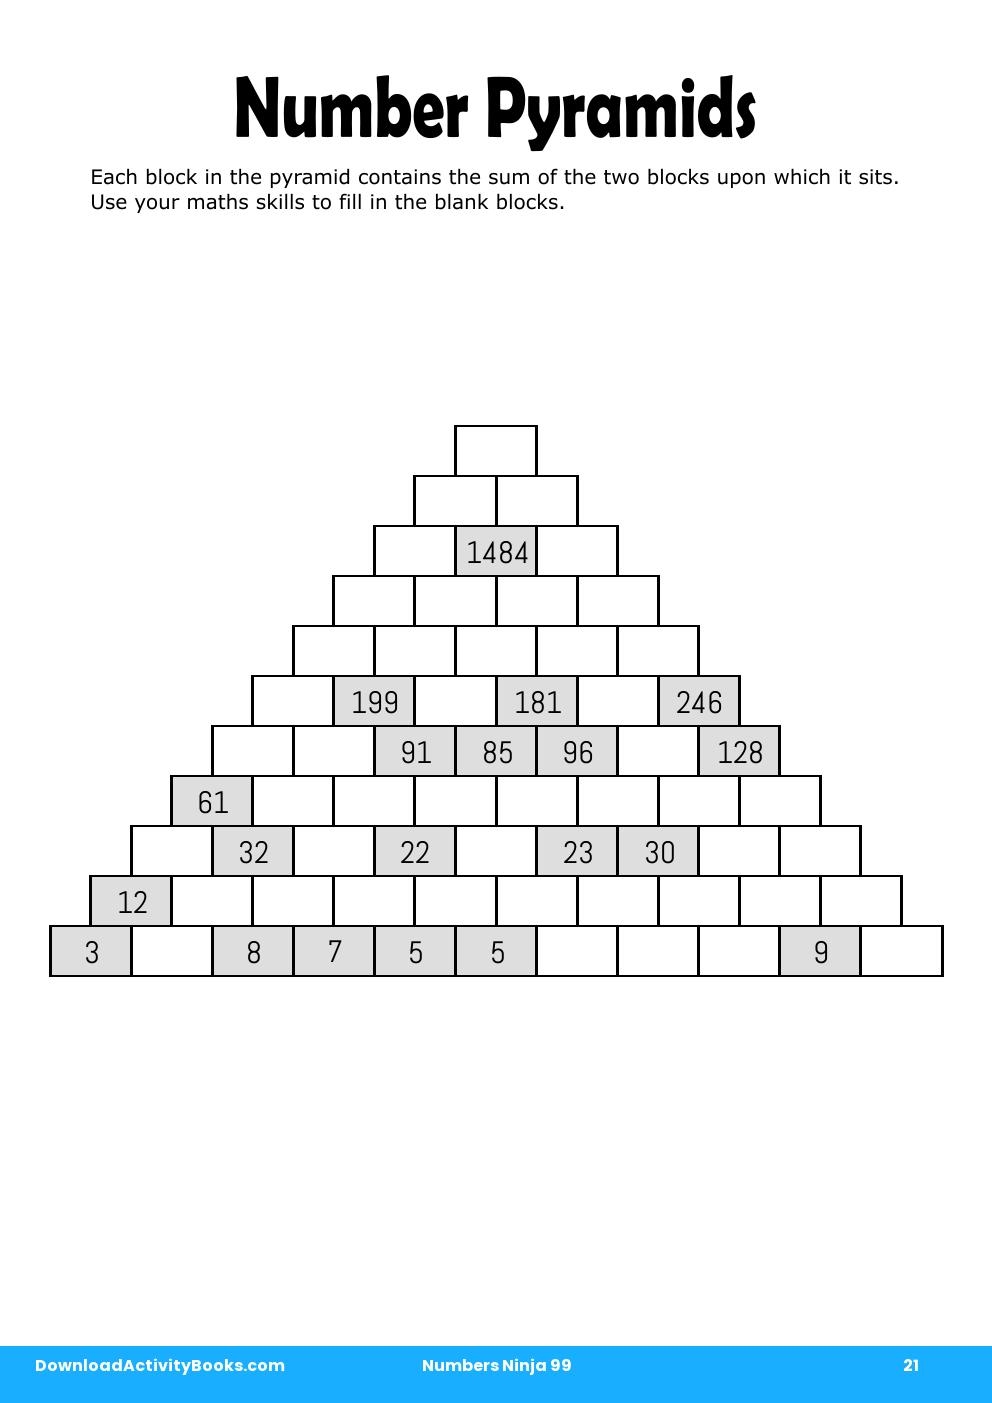 Number Pyramids in Numbers Ninja 99